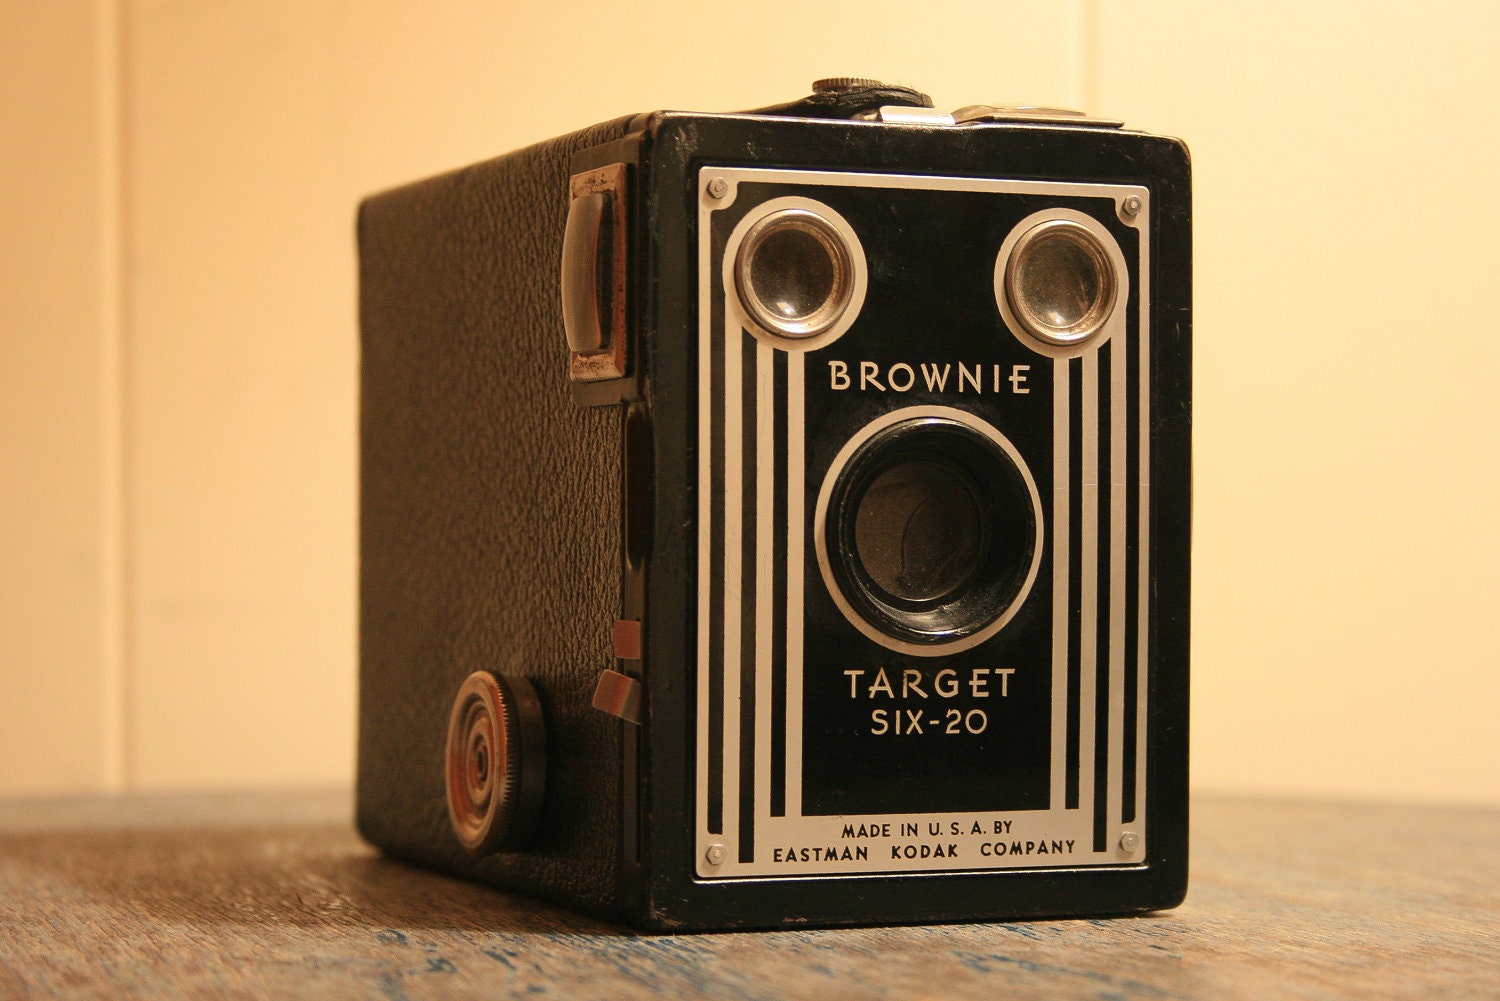 Vintage Kodak Brownie Target Six-16 Camera 1940s Black1500 x 1001